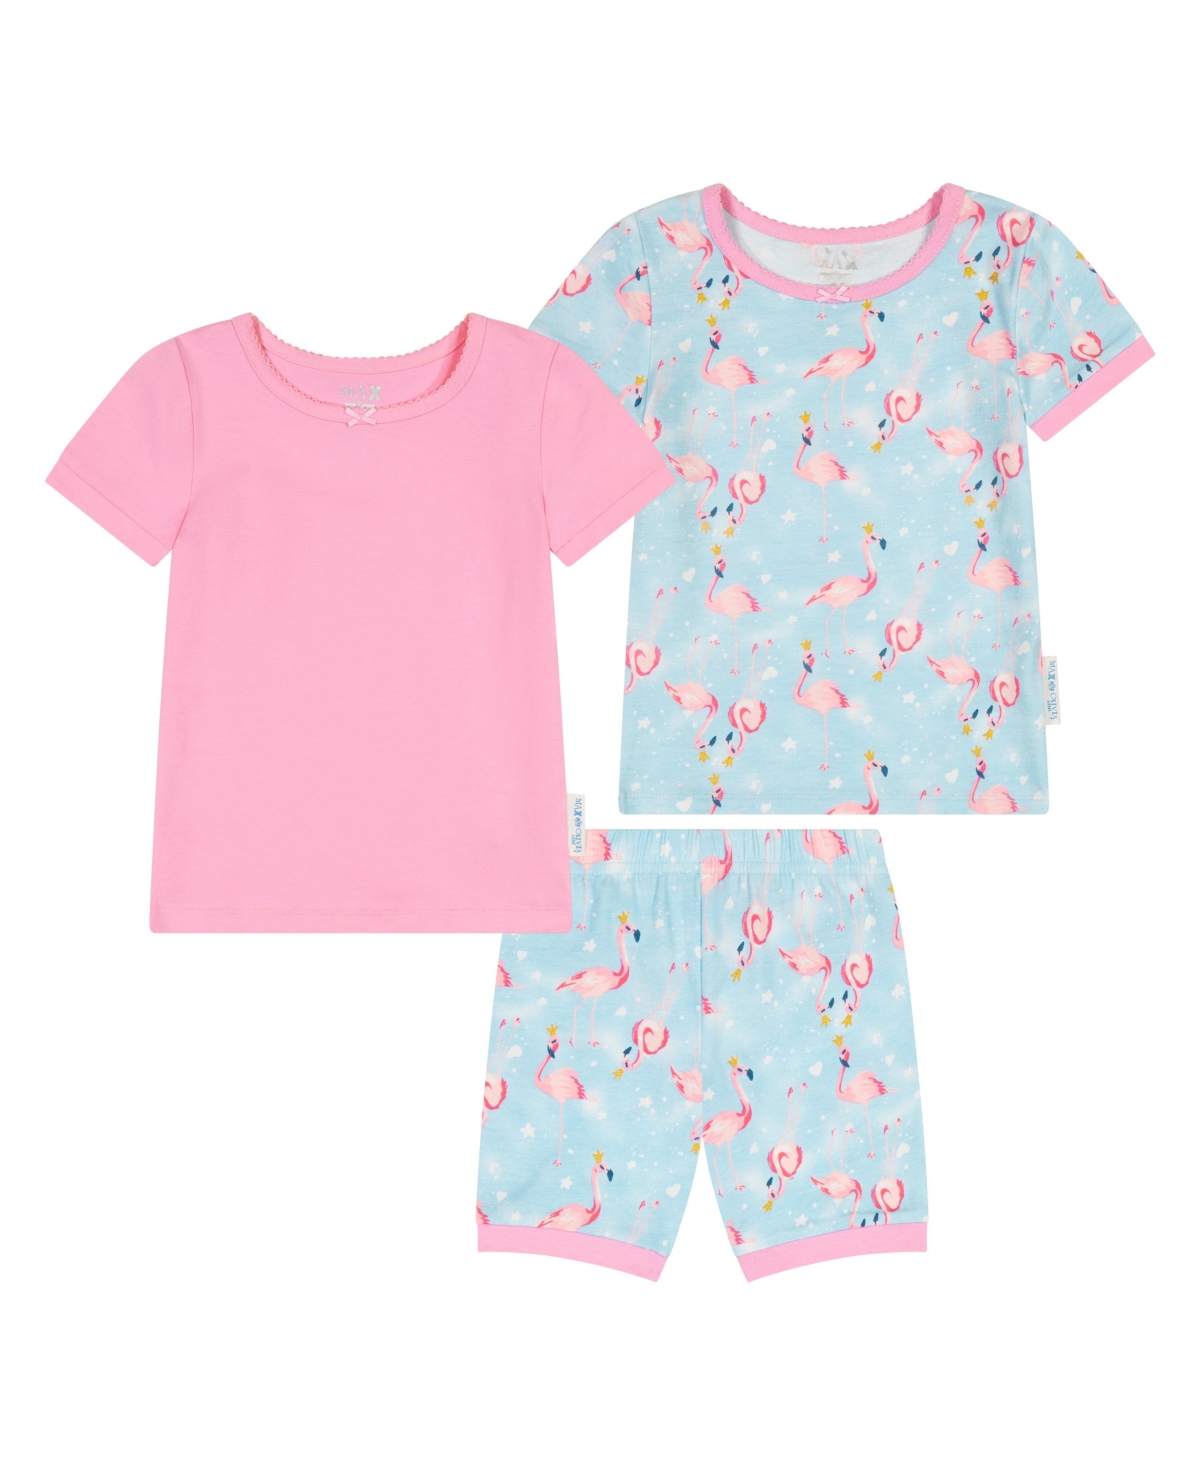 Max & Olivia Toddler Girls Flamingo Snug Fit Pajama, 3 Piece Set In Pink